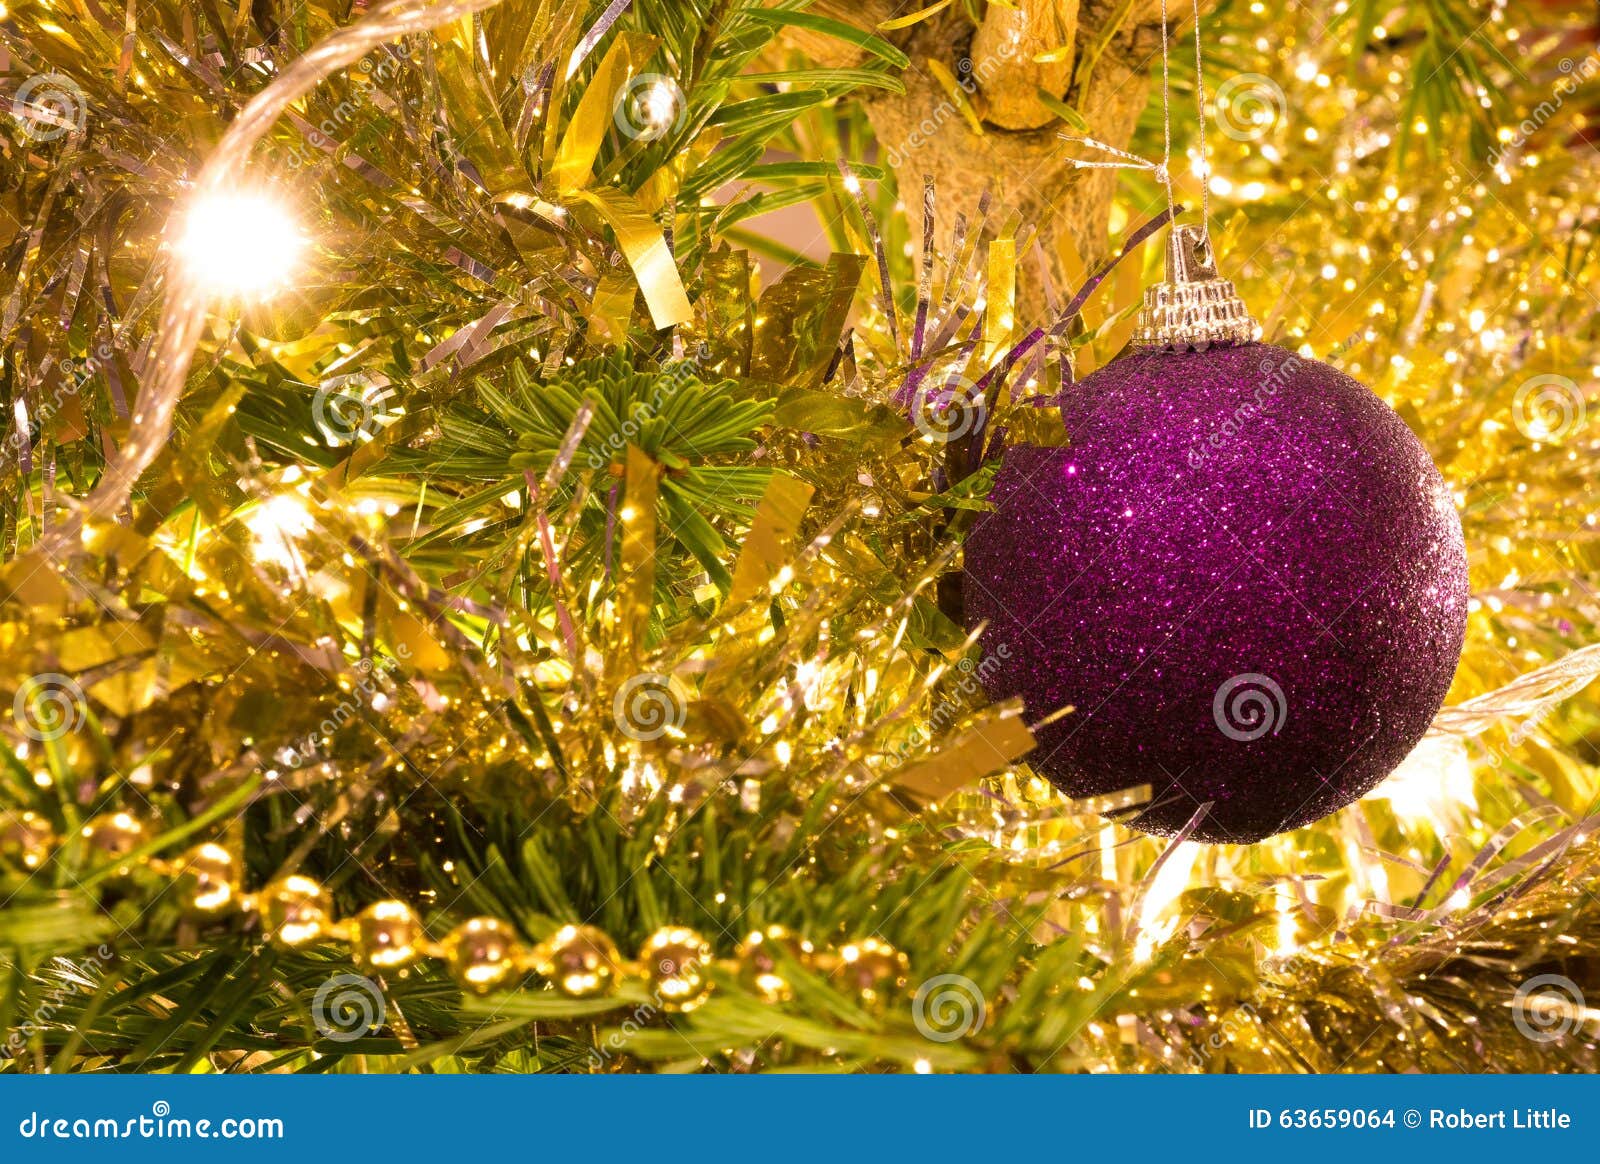 Christmas Bauble stock photo. Image of hanging, tree - 63659064